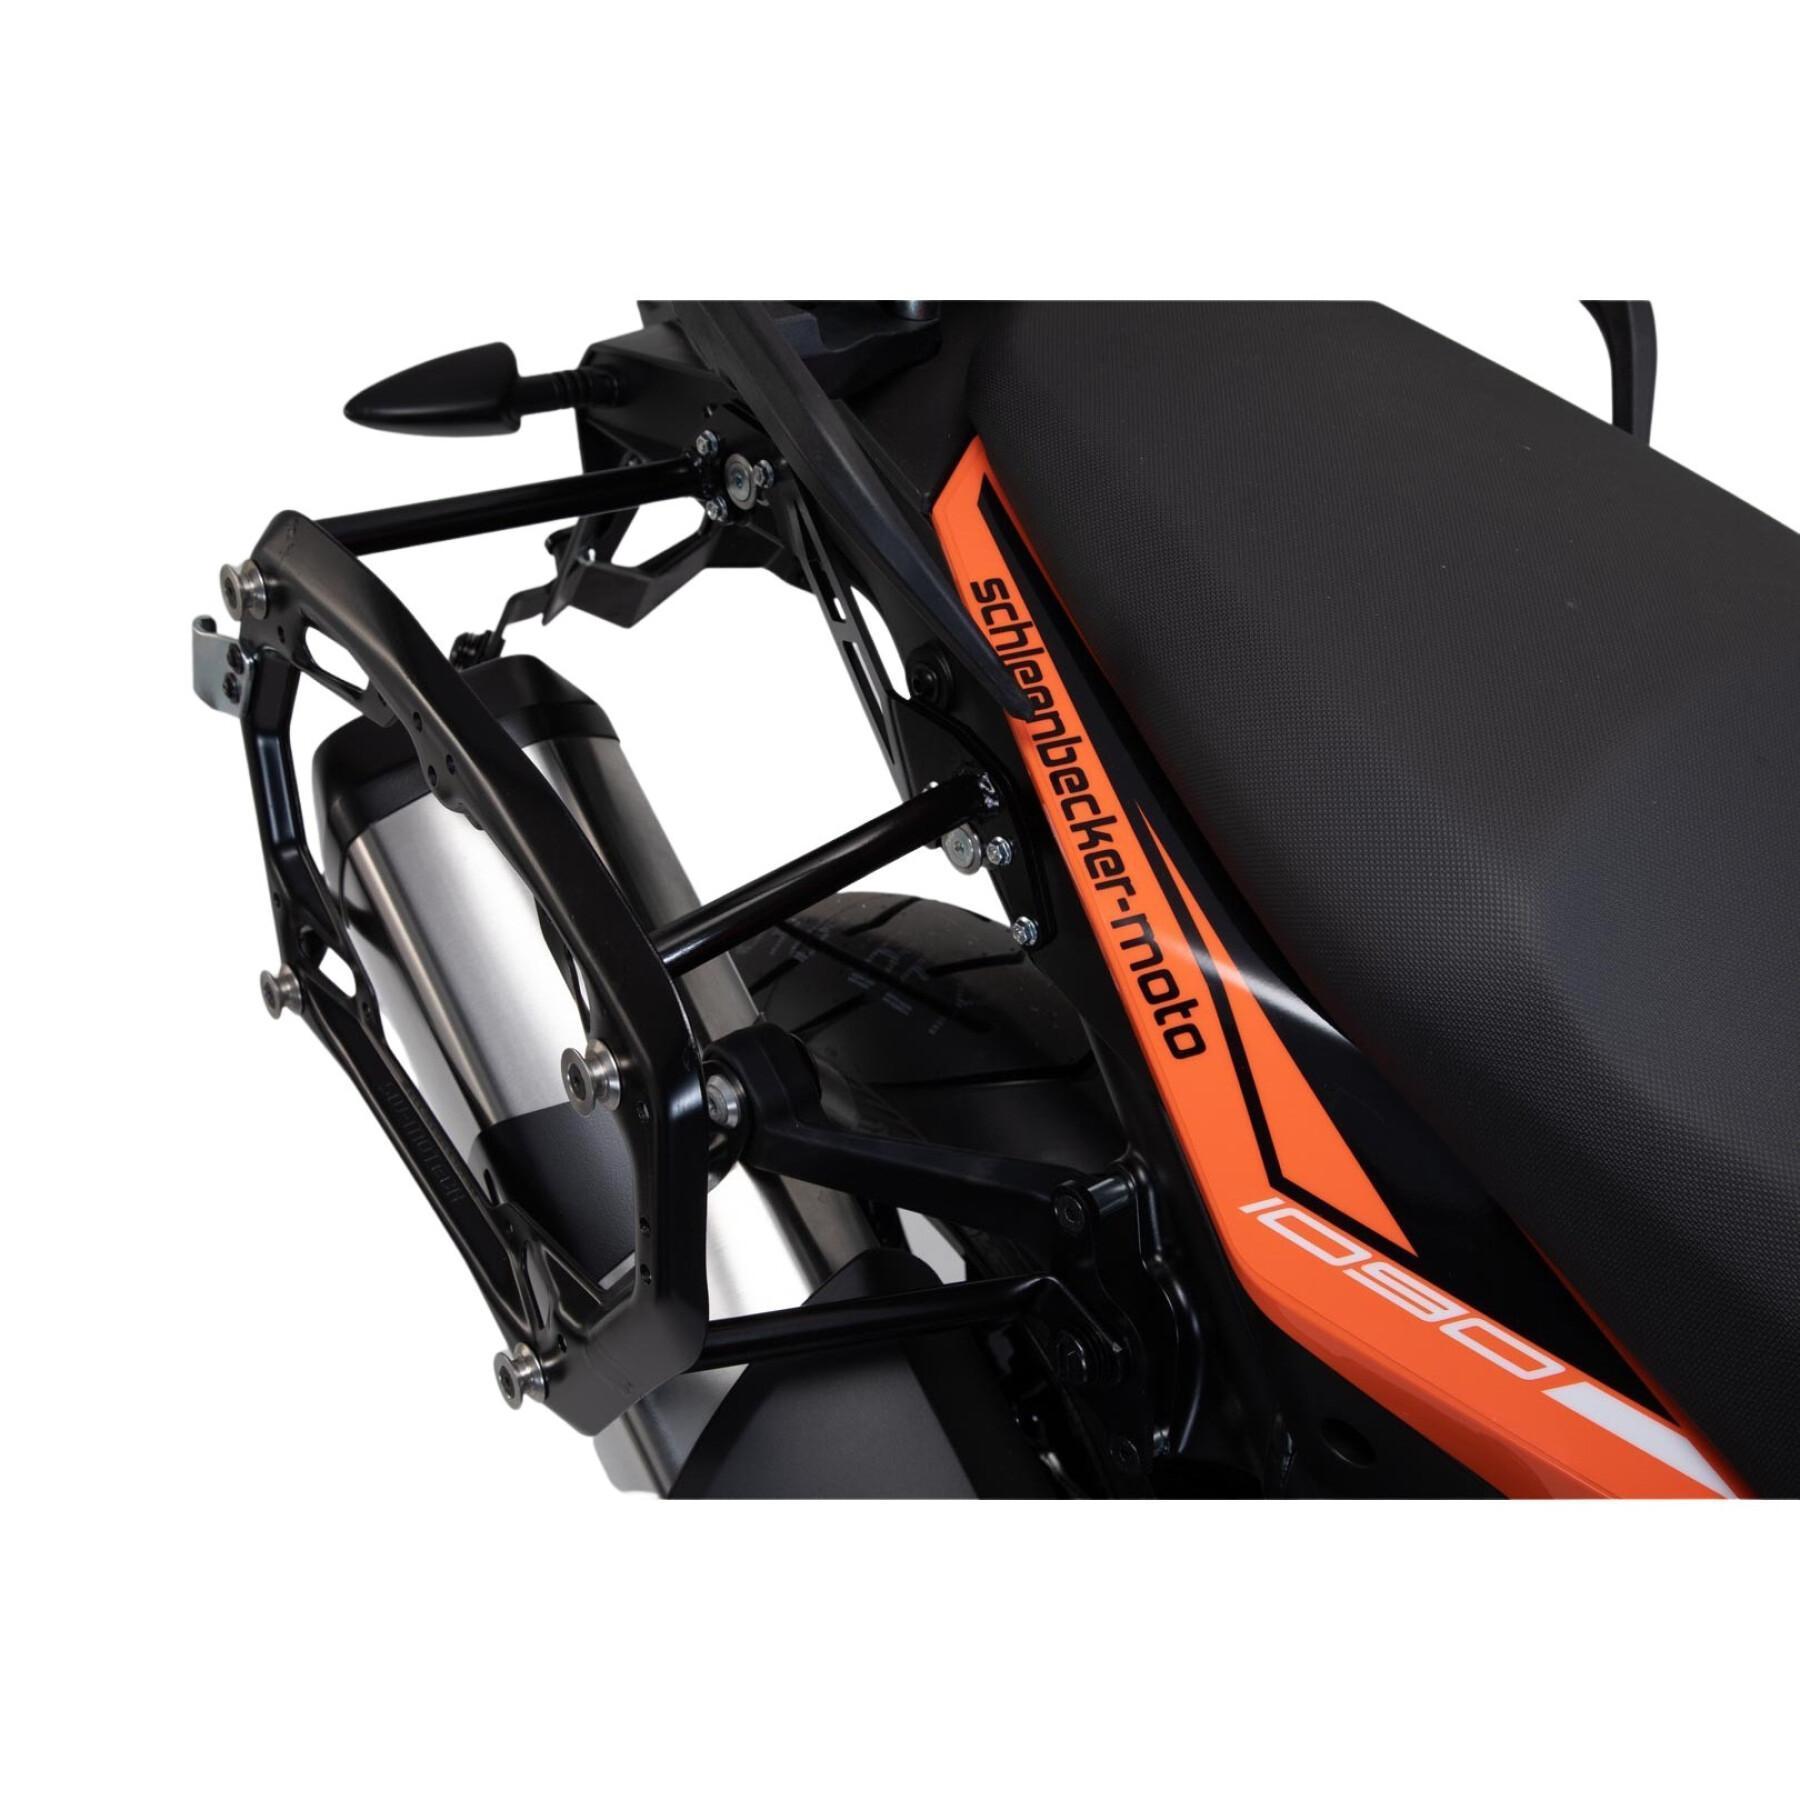 Support valises latérales moto Sw-Motech Pro. Ktm 1050/1090/1190 Adv,1290 Sadv